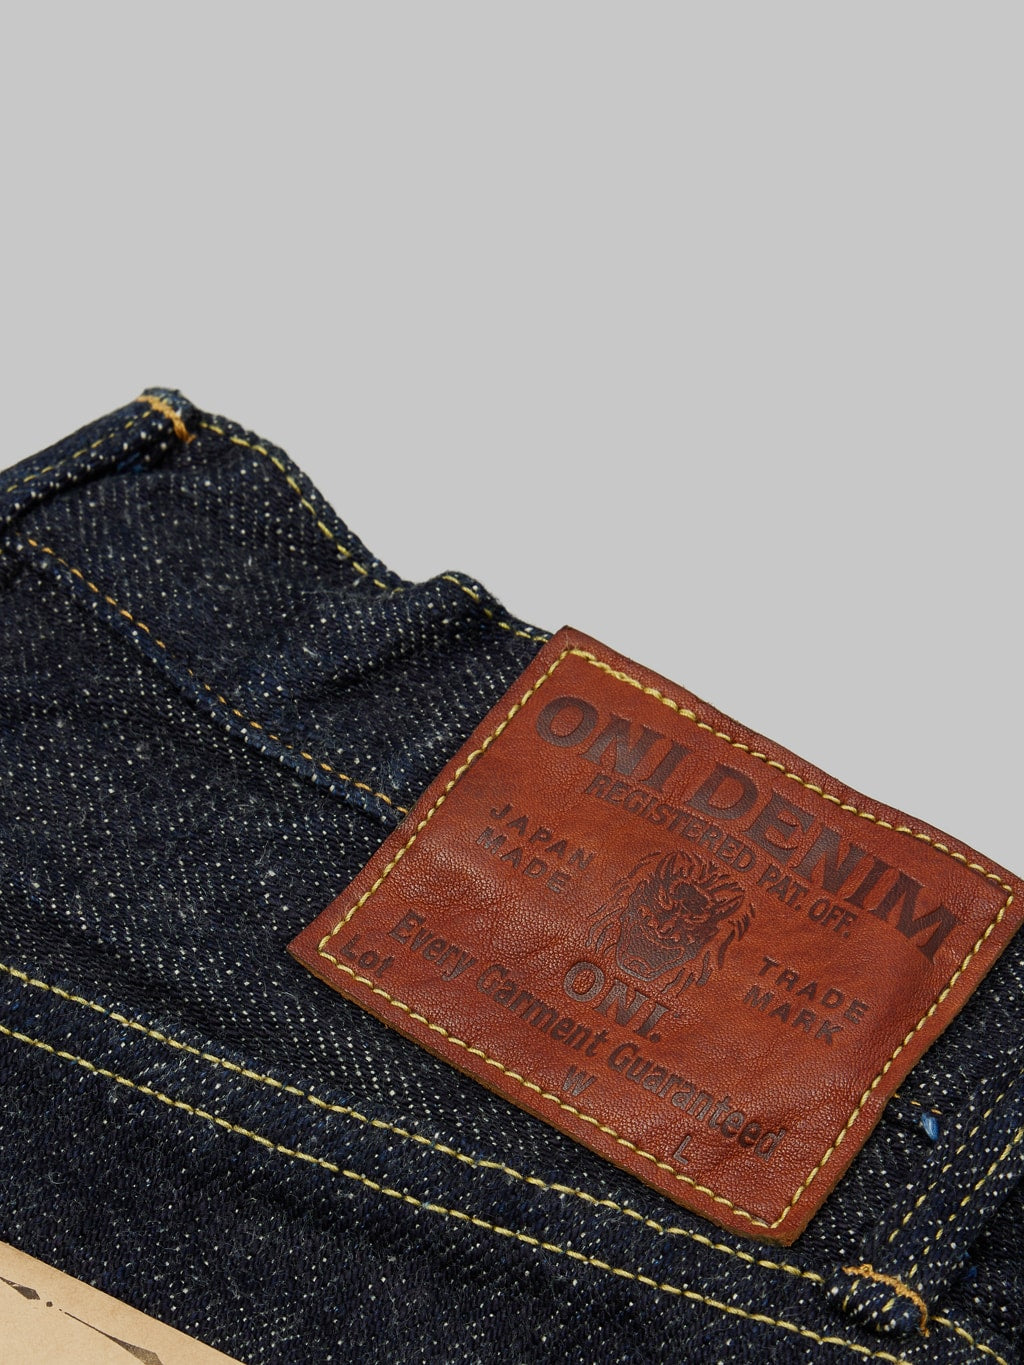 ONI Denim 622DIZR Dark Indigo Secret Denim 20oz Jeans leather patch